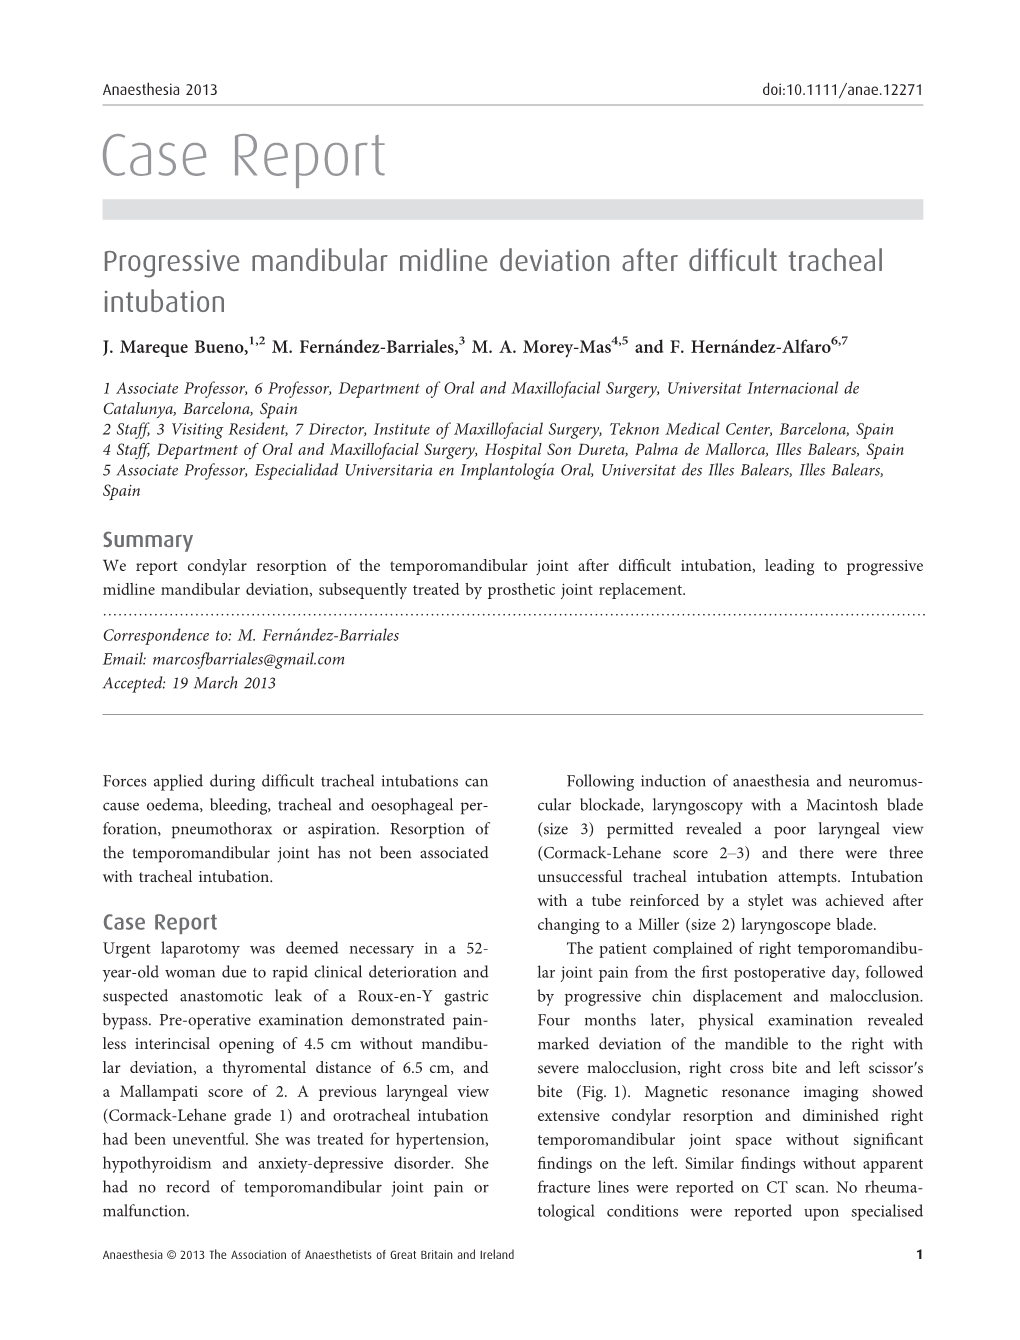 Progressive Mandibular Midline Deviation After Difficult Tracheal